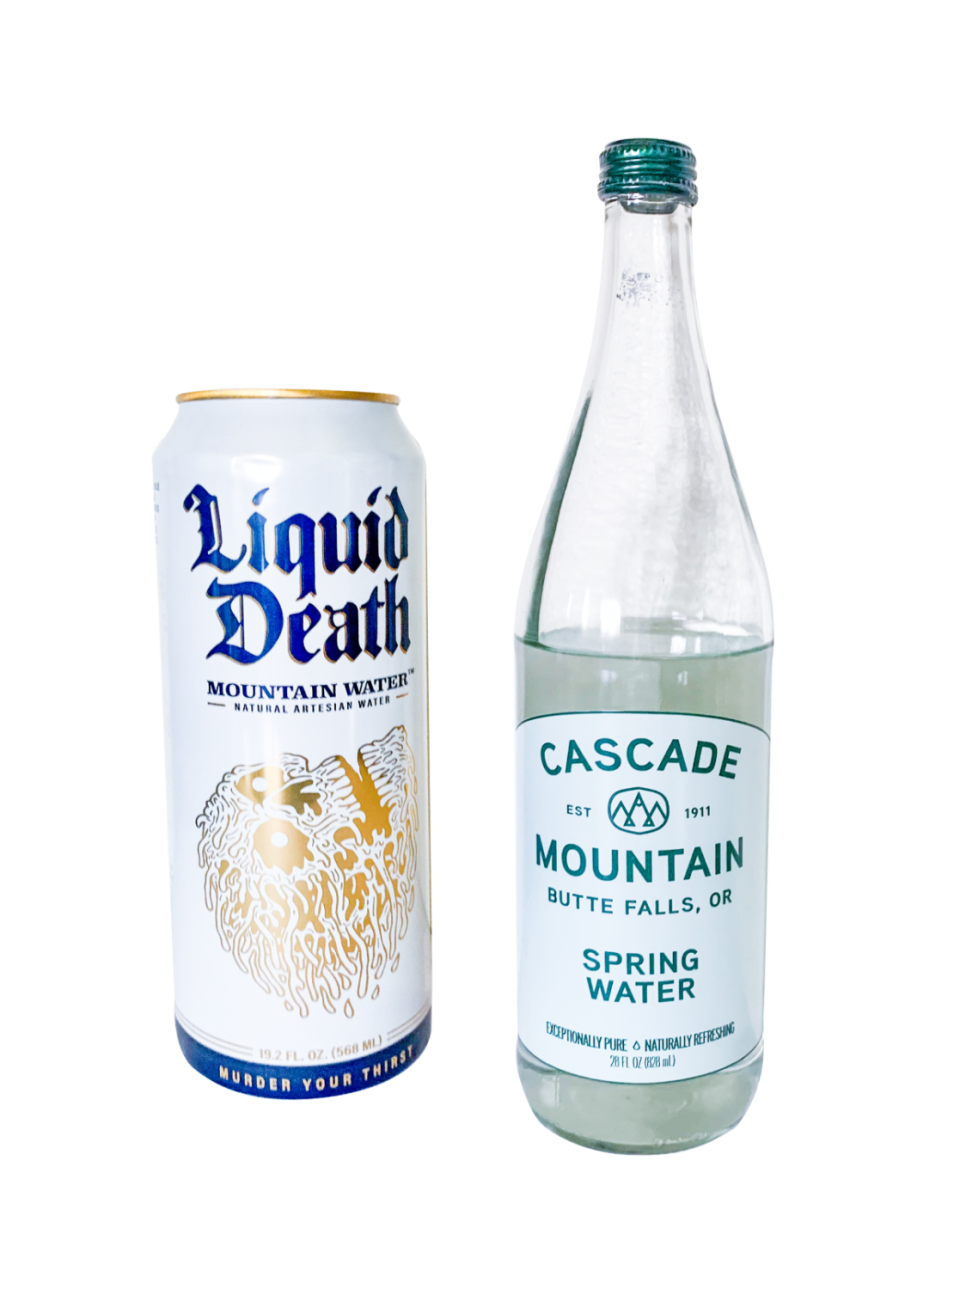 Liquid Death and Cascade Mountain Water